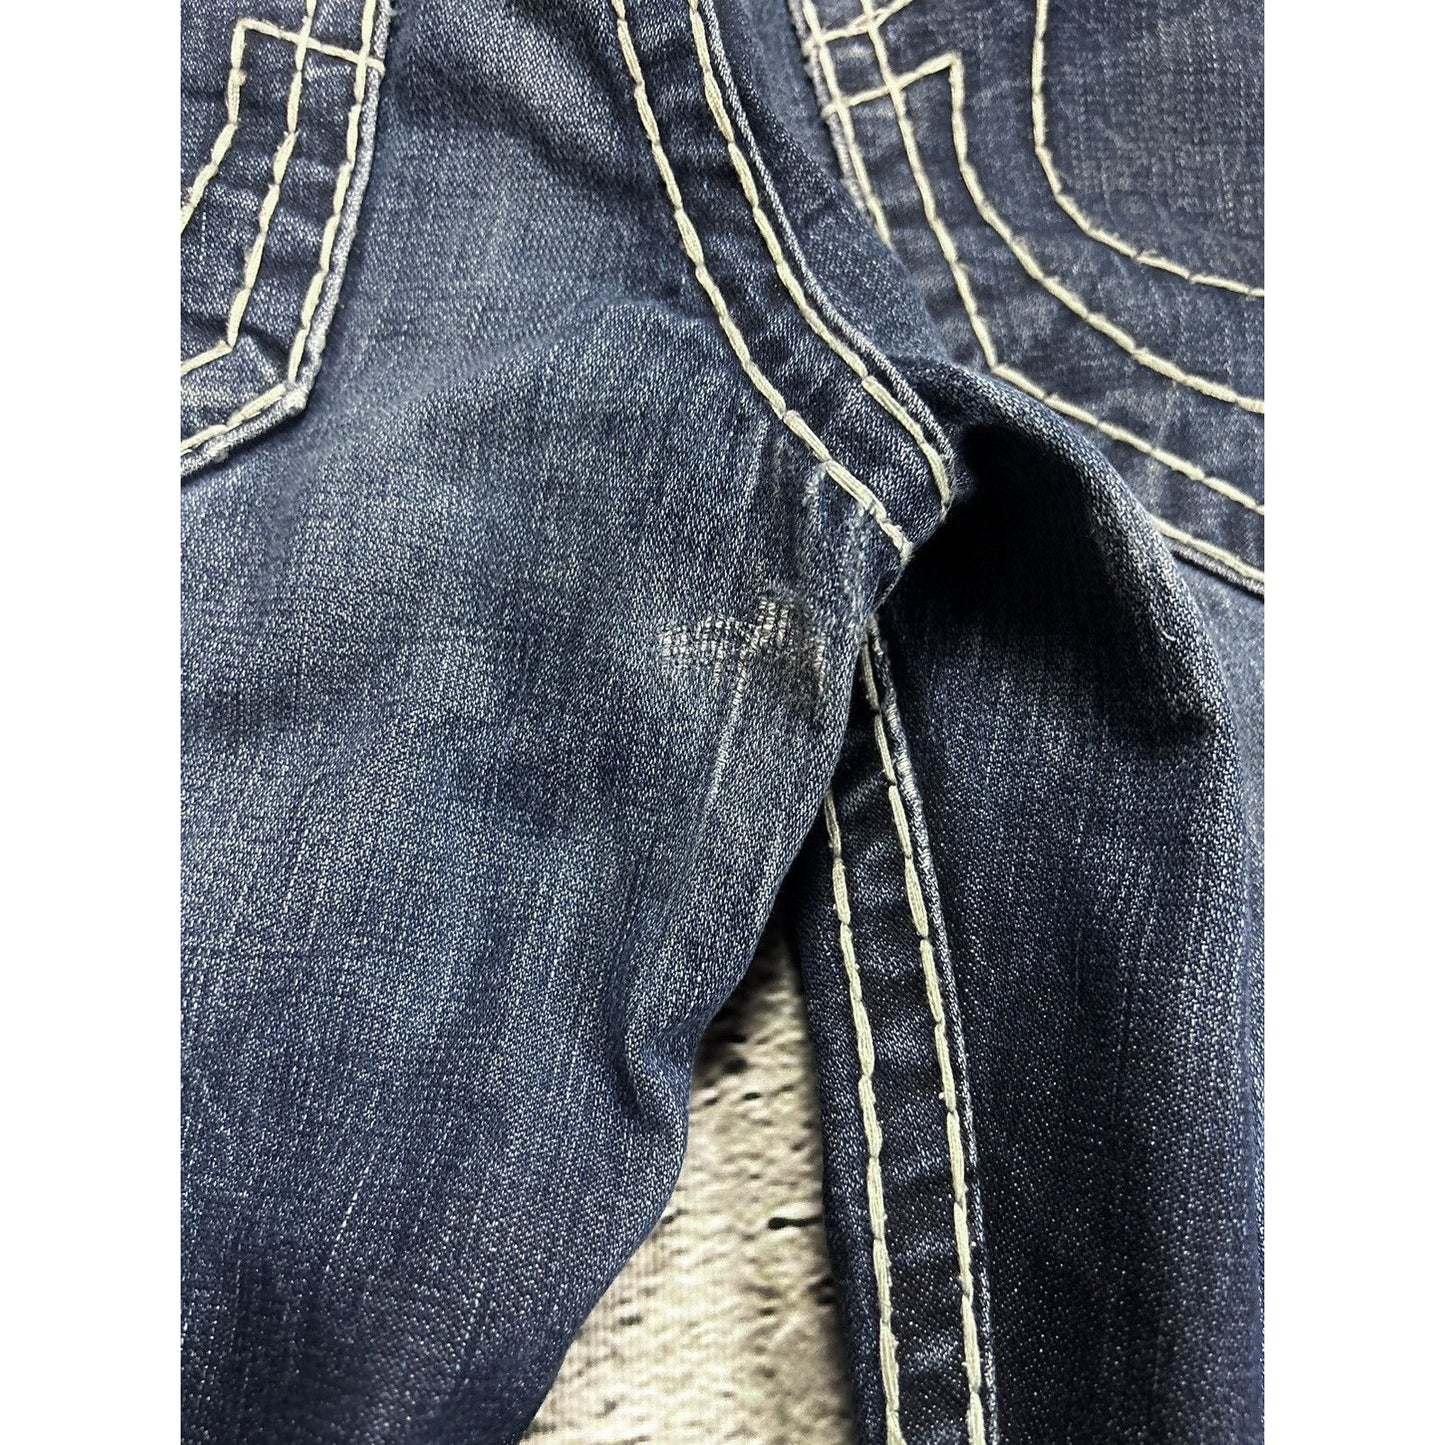 True Religion jeans navy white thick stitching bobby